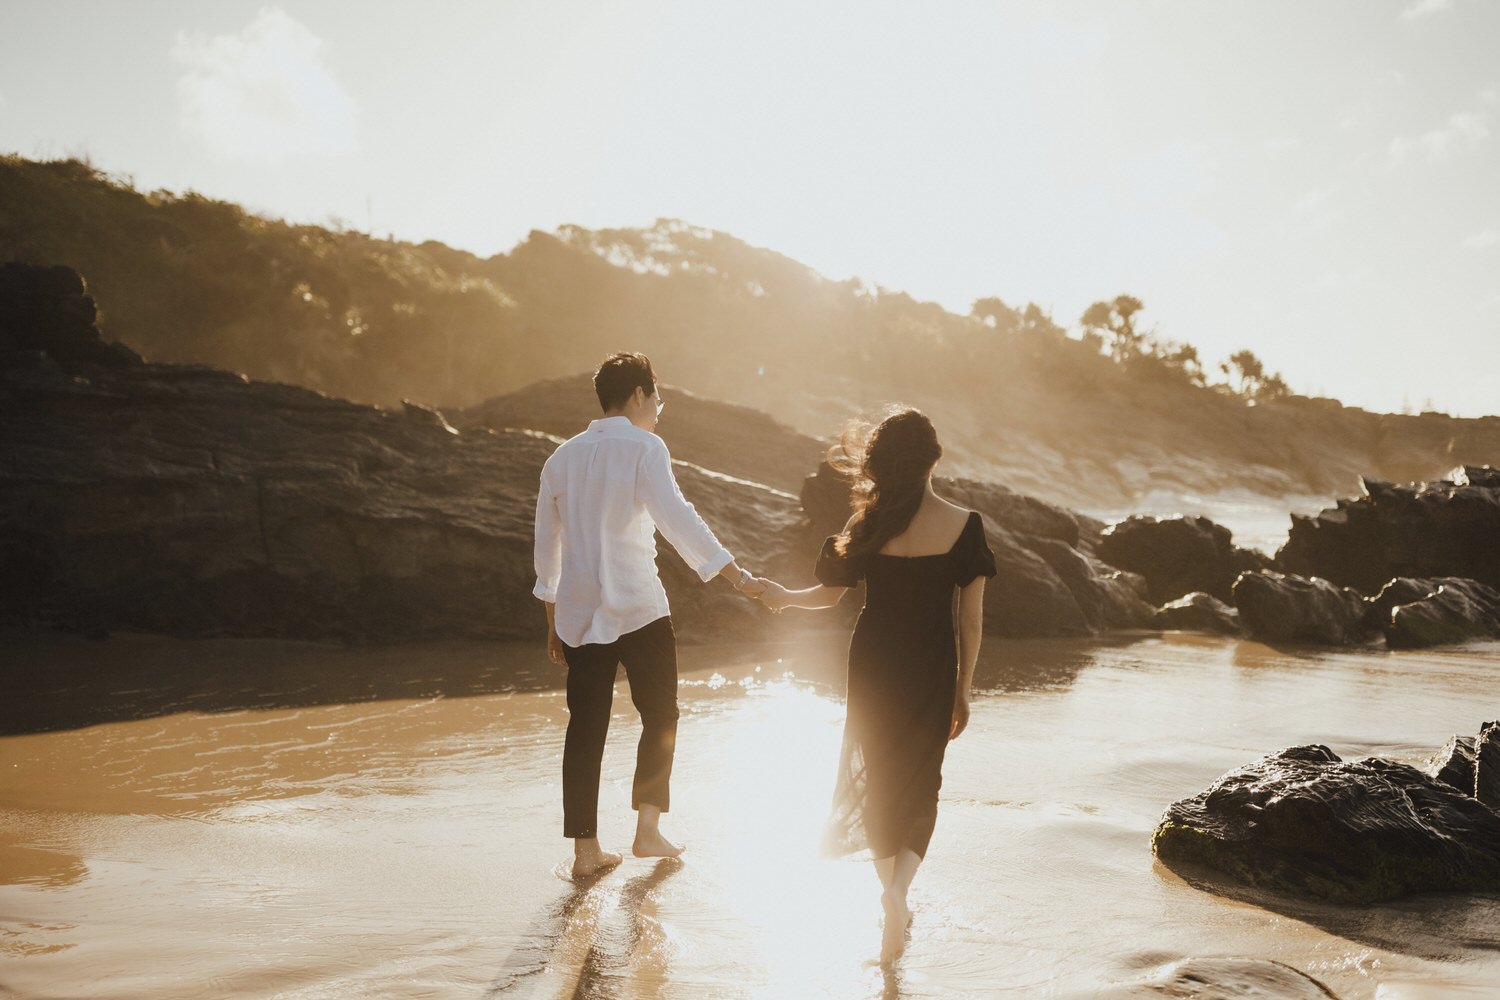 Gold Coast wedding photographer engagement photos at cabarita beach at sunset with coastal backdrop